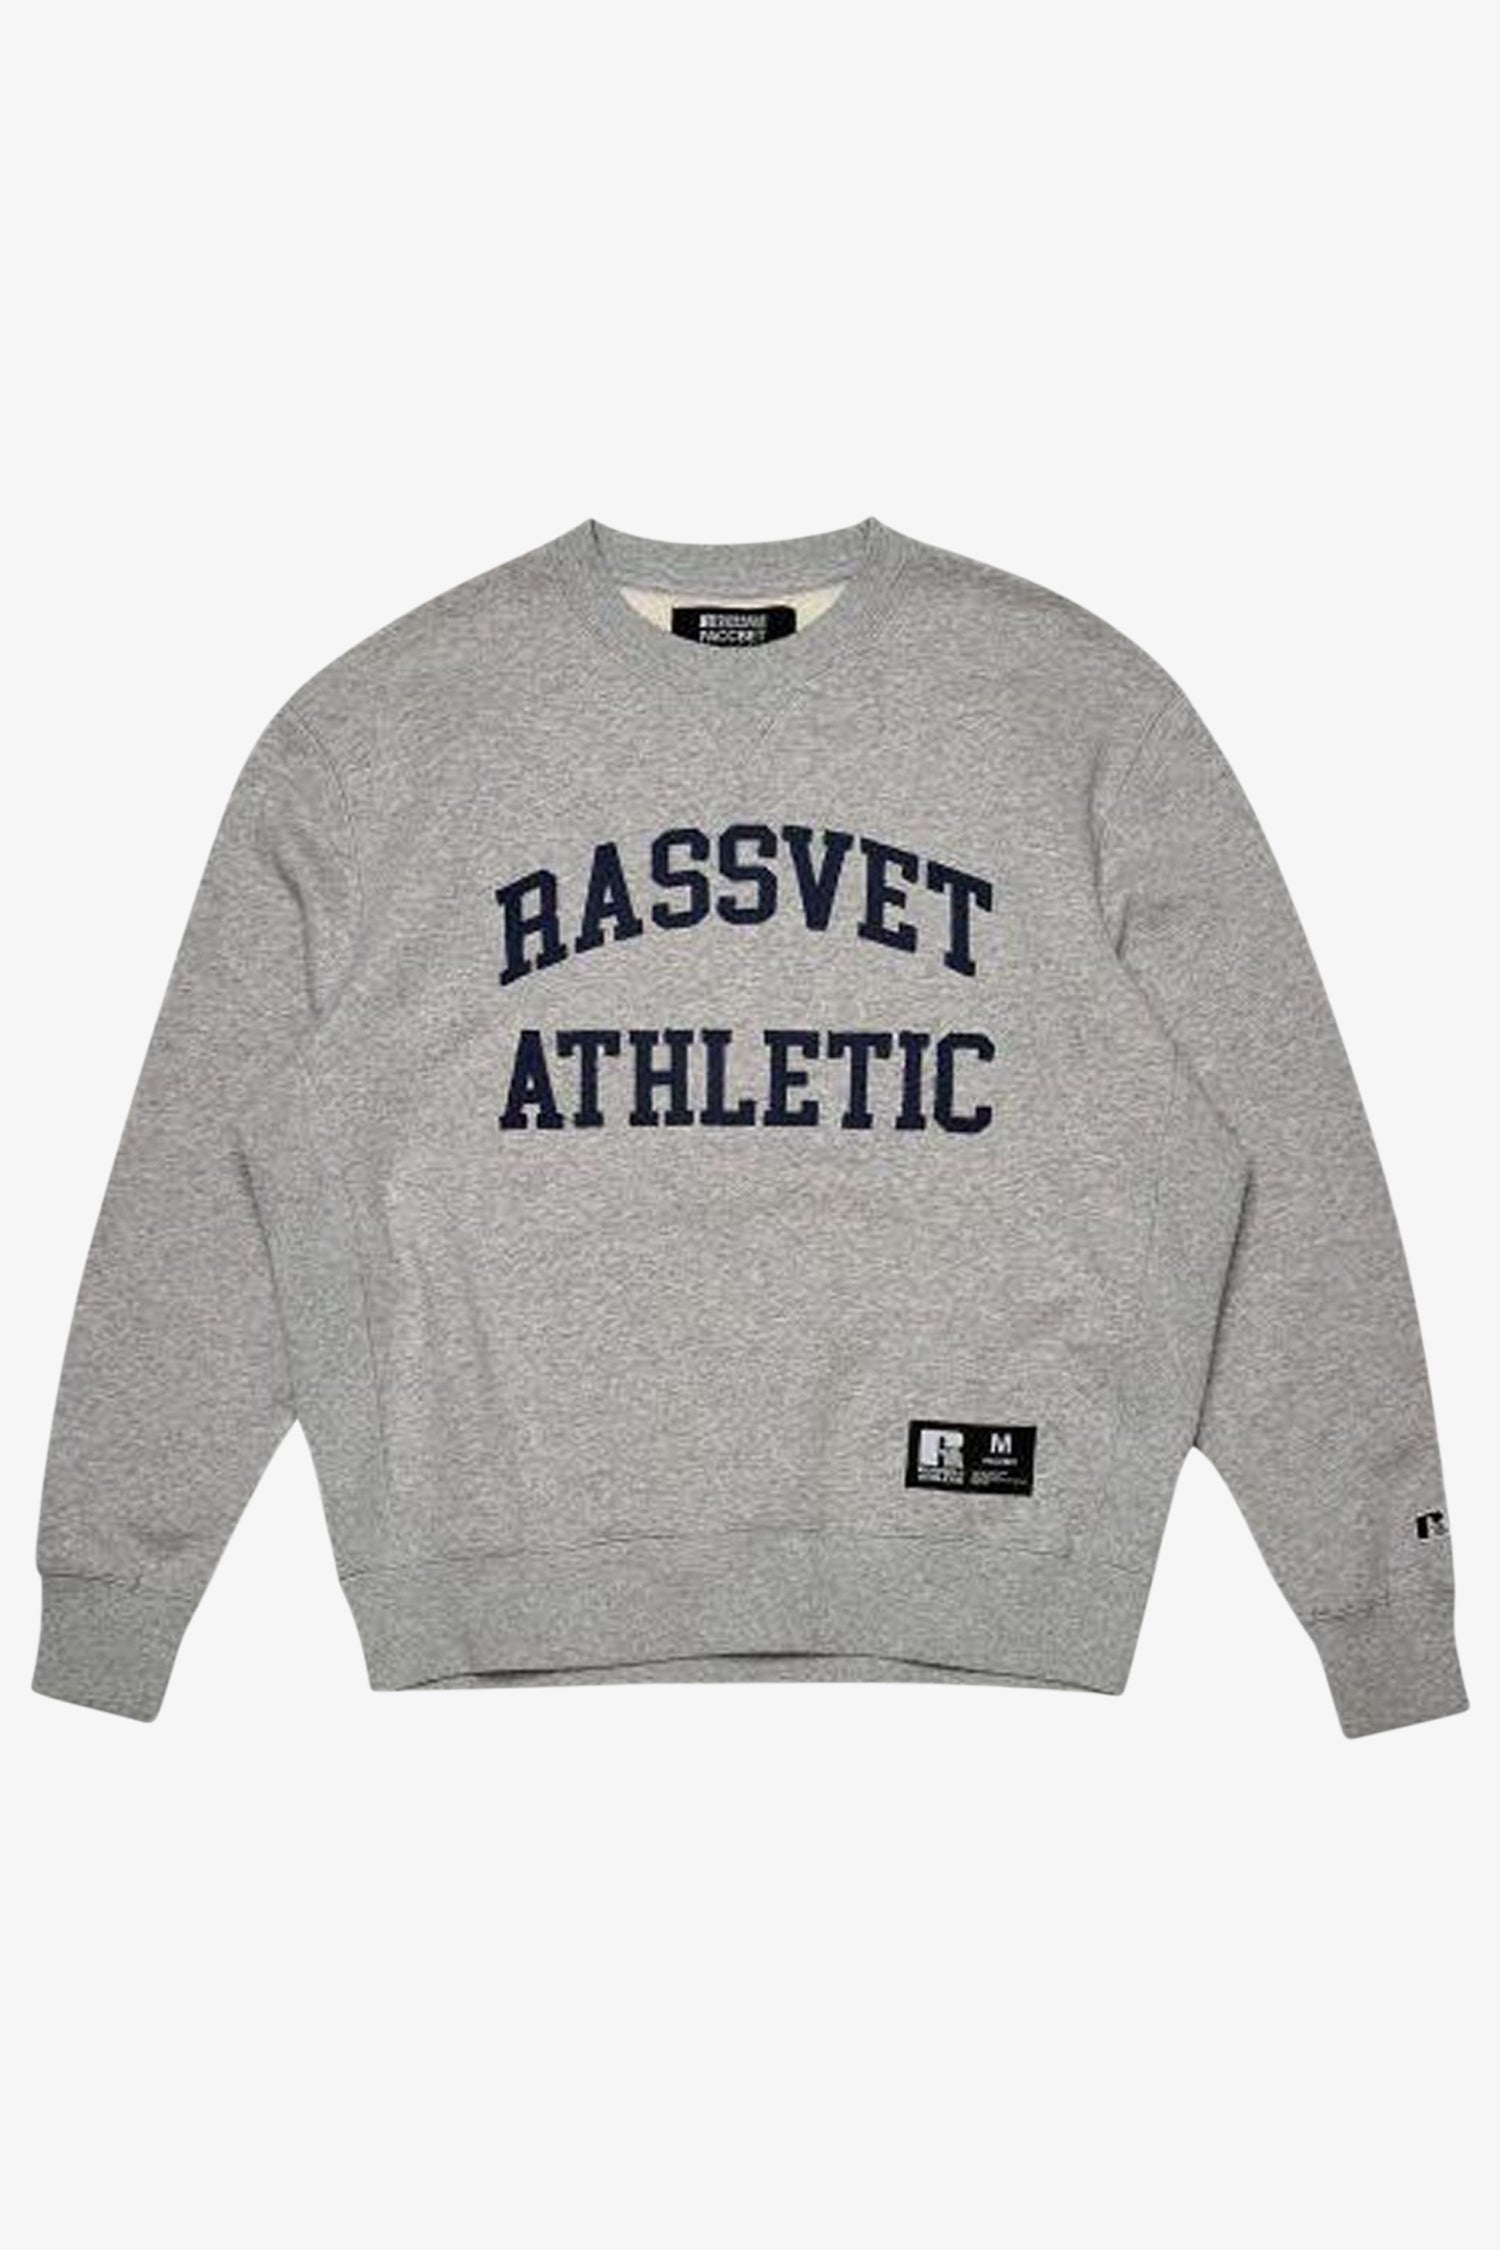 Selectshop FRAME - RASSVET Russell Athletic Sweatshirt Sweatshirts Dubai